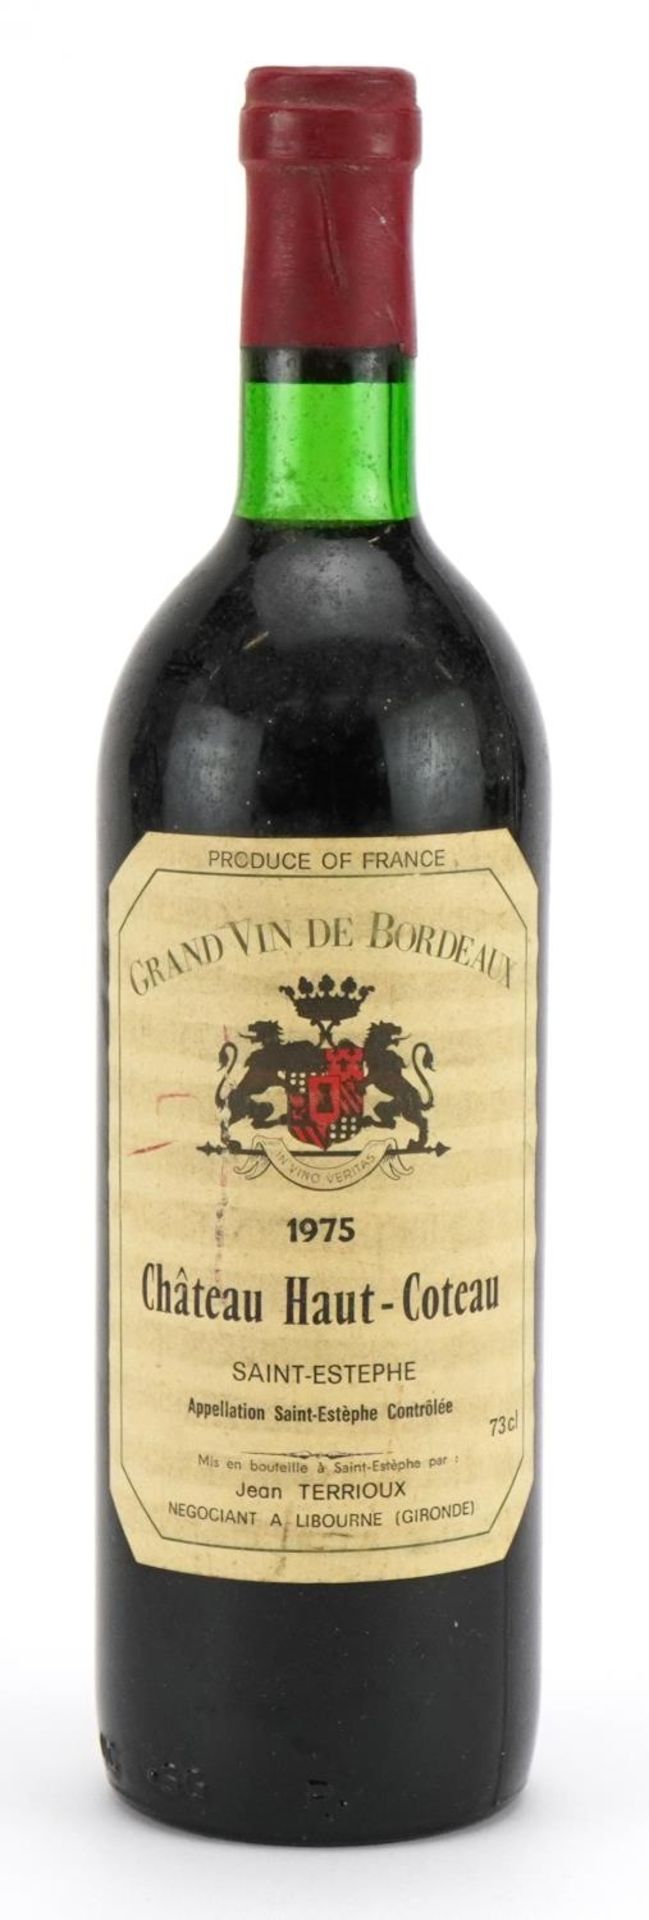 Bottle of 1975 Chateau Haut-Coteau Saint Estephe red wine